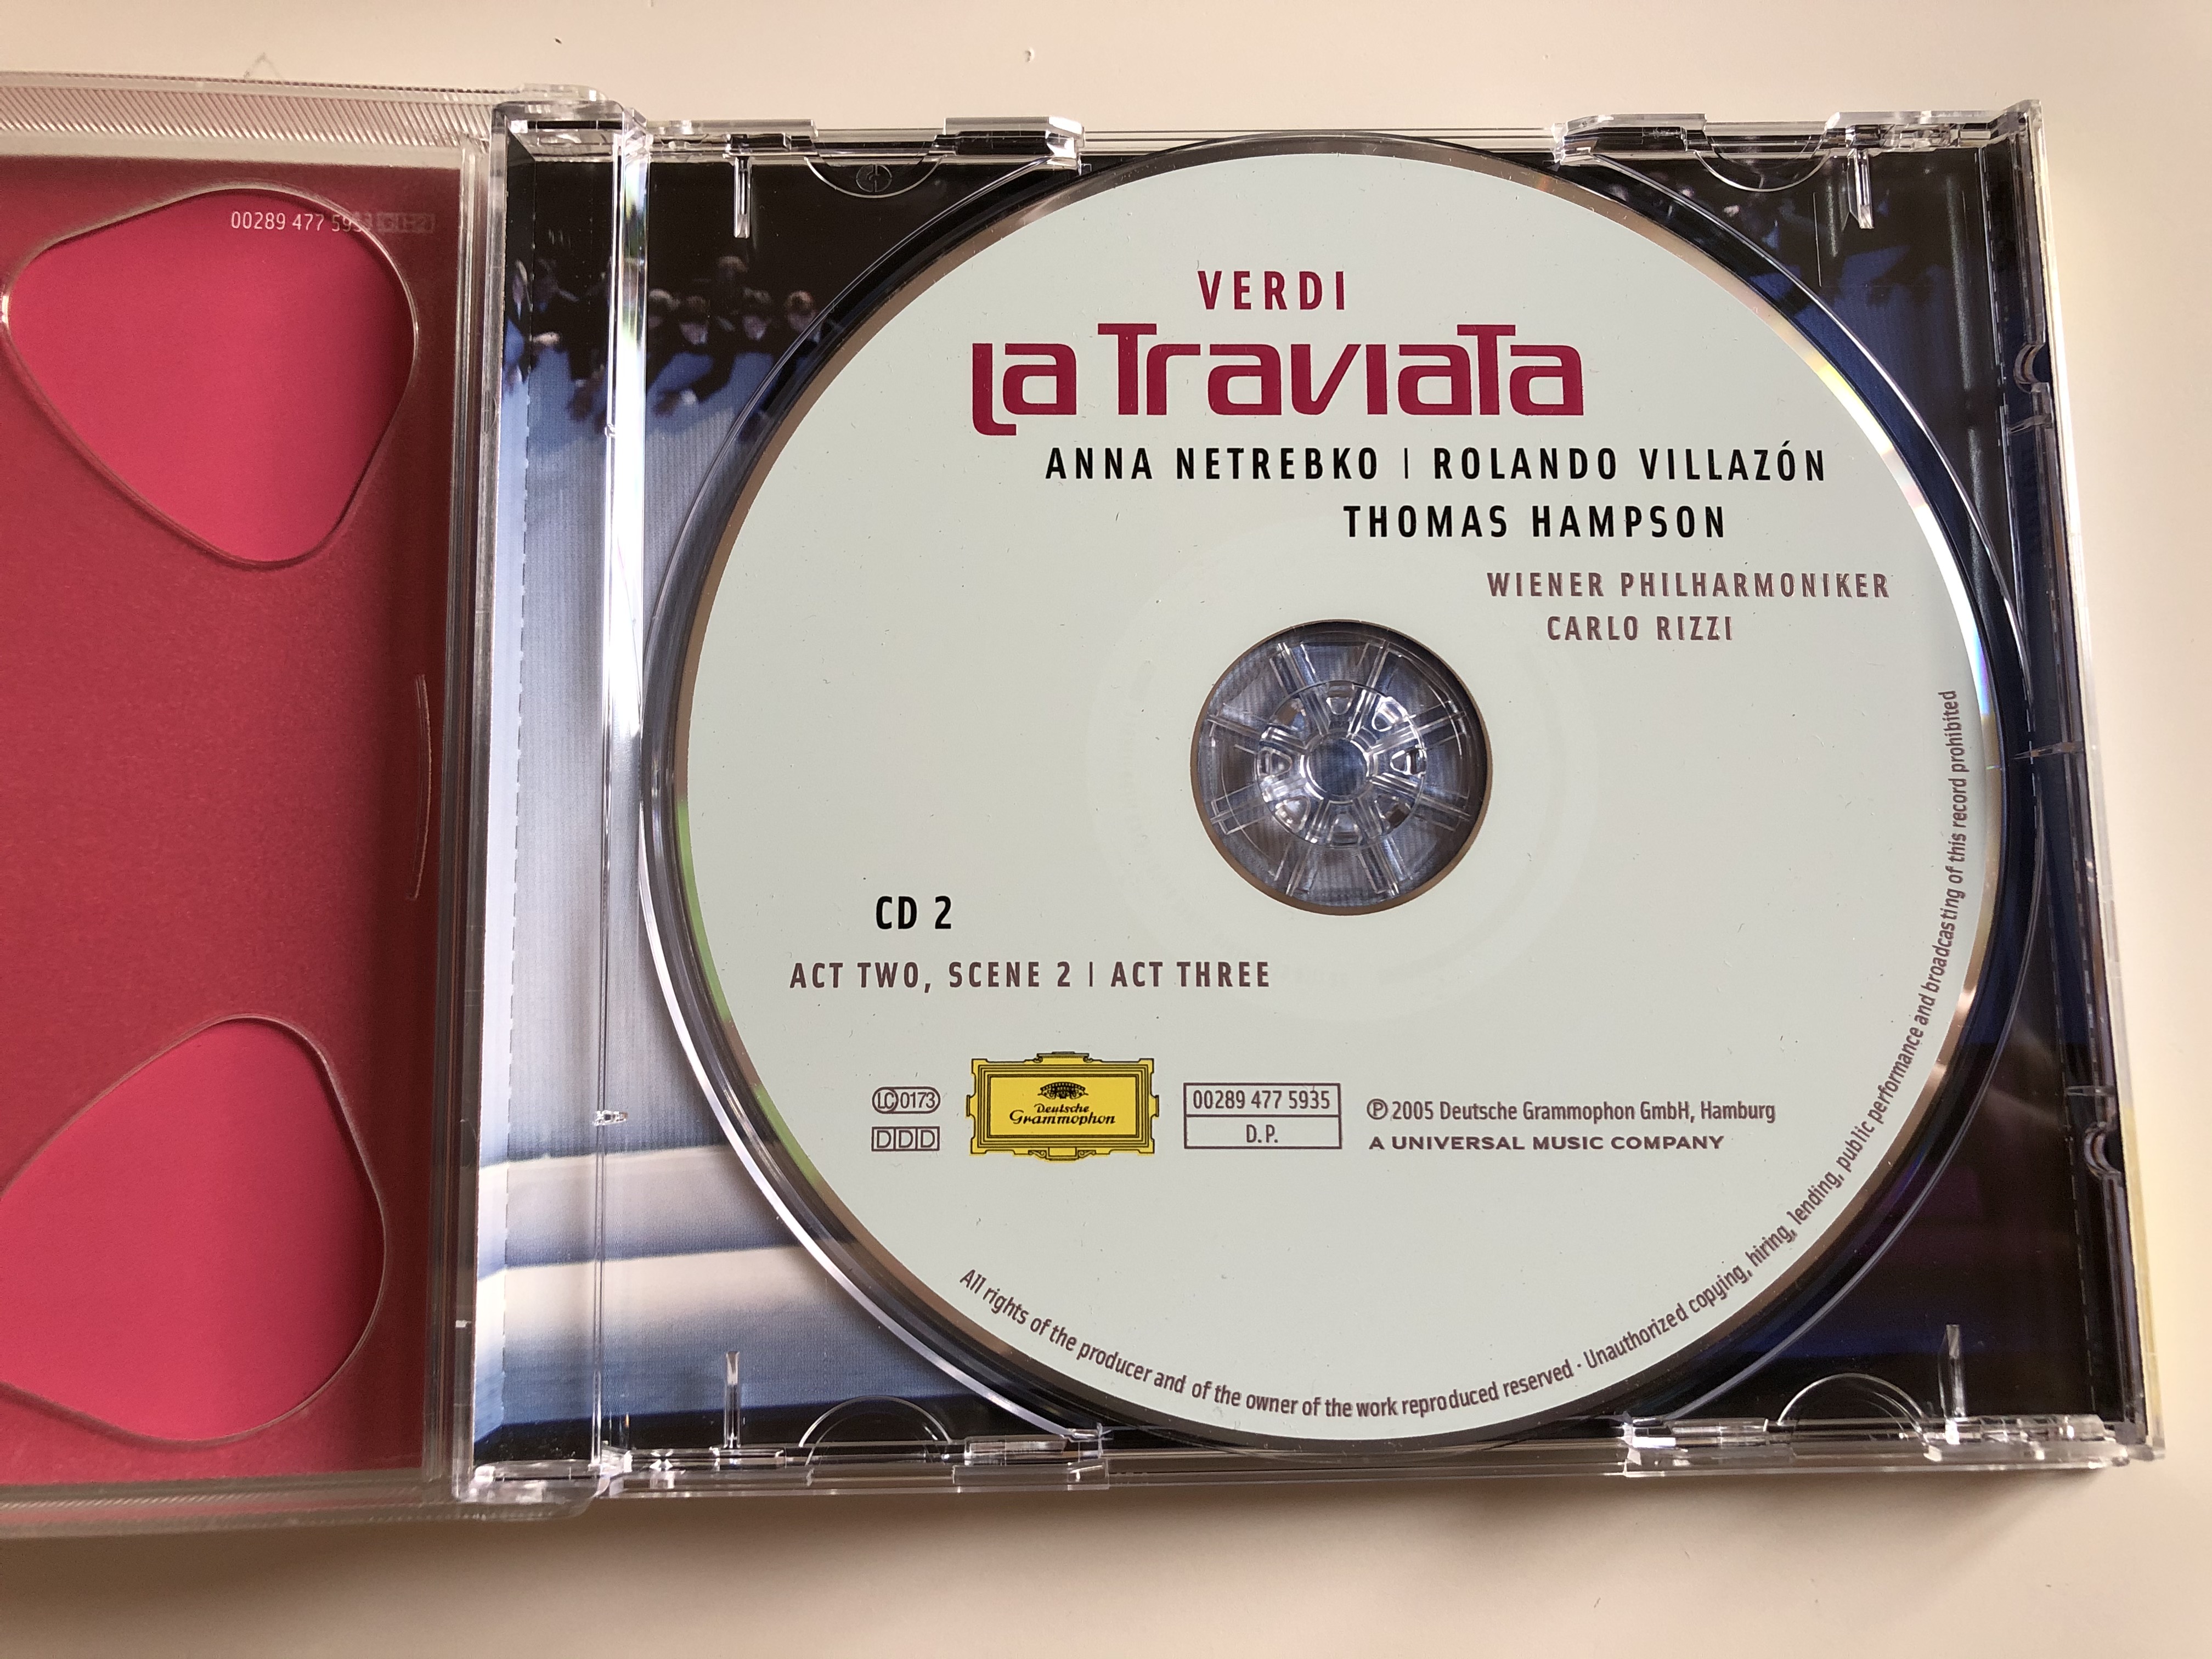 verdi-la-traviata-anna-netrebko-rolando-villaz-n-thomas-hampson-wiener-philharmoniker-carlo-rizzi-deutsche-grammophon-2x-audio-cd-2005-00289-477-5933-4-.jpg